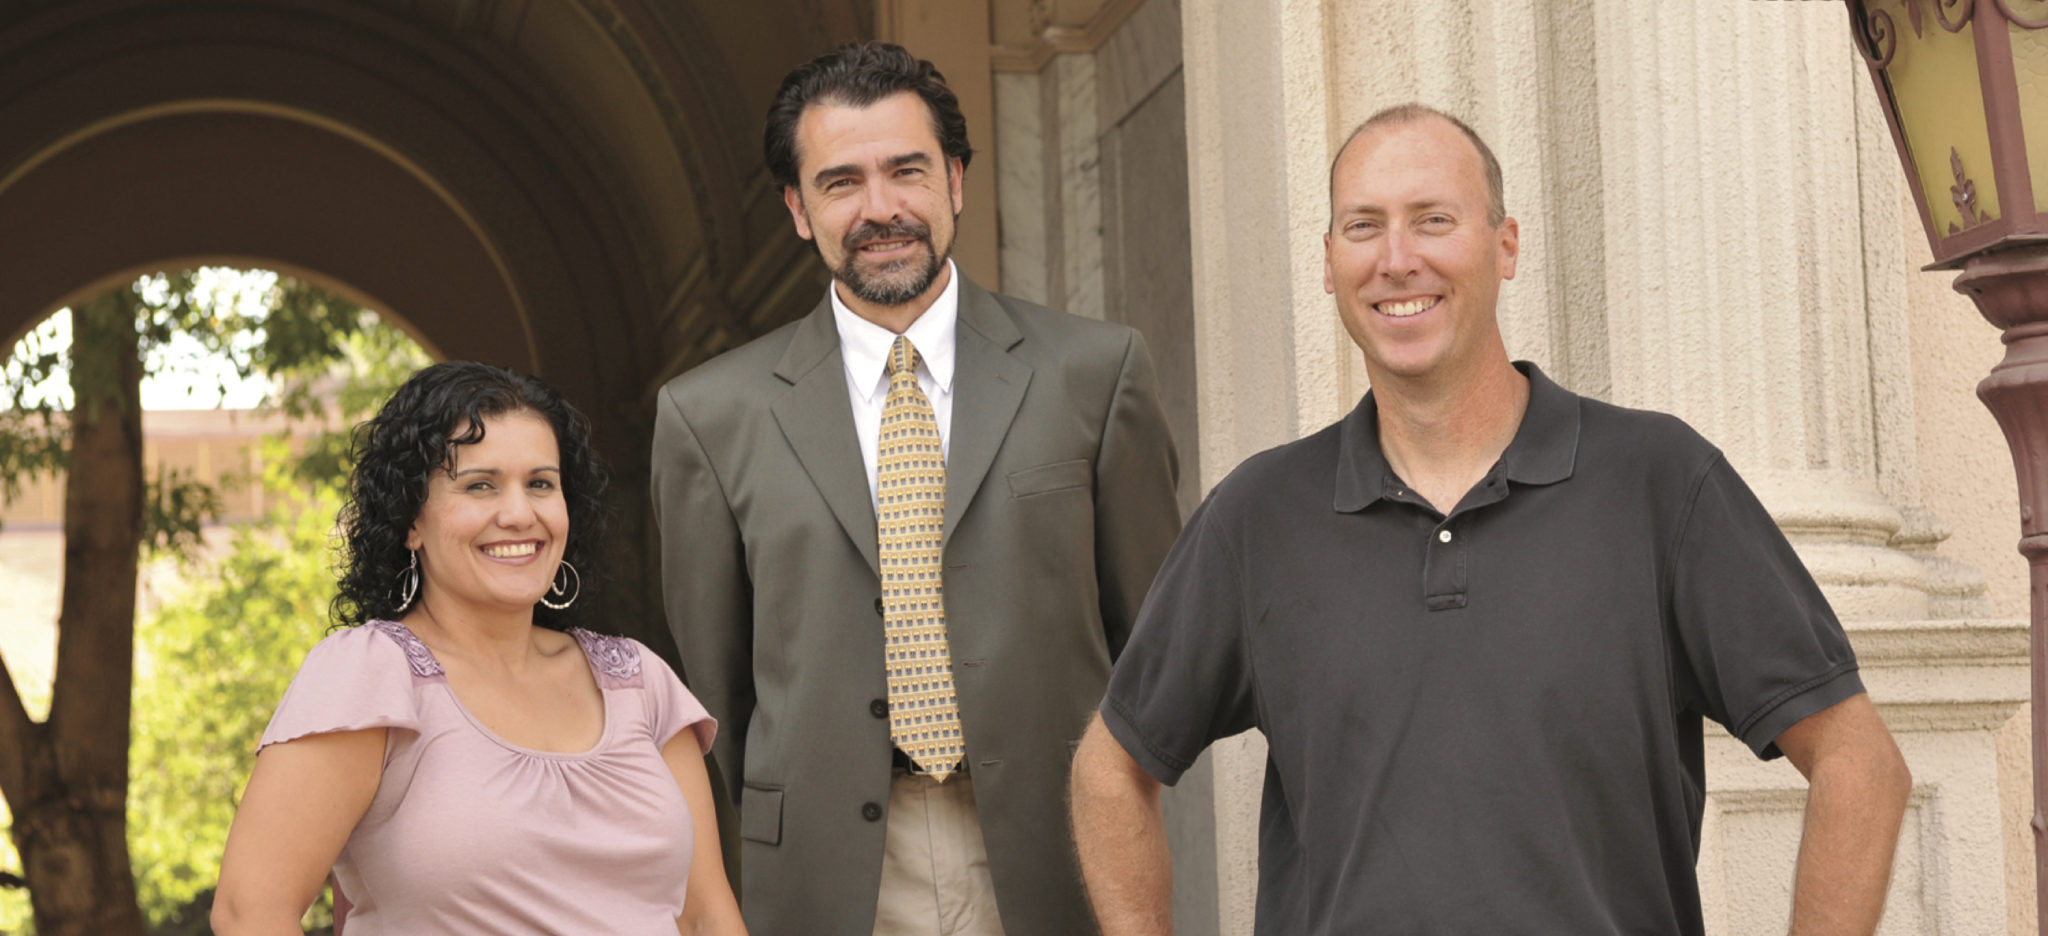 Ministry, history, chemistry: Left to right, they're Lulu Santana, Fabio López-Lázaro, and Craig Stephens. Photo: Charles Barry